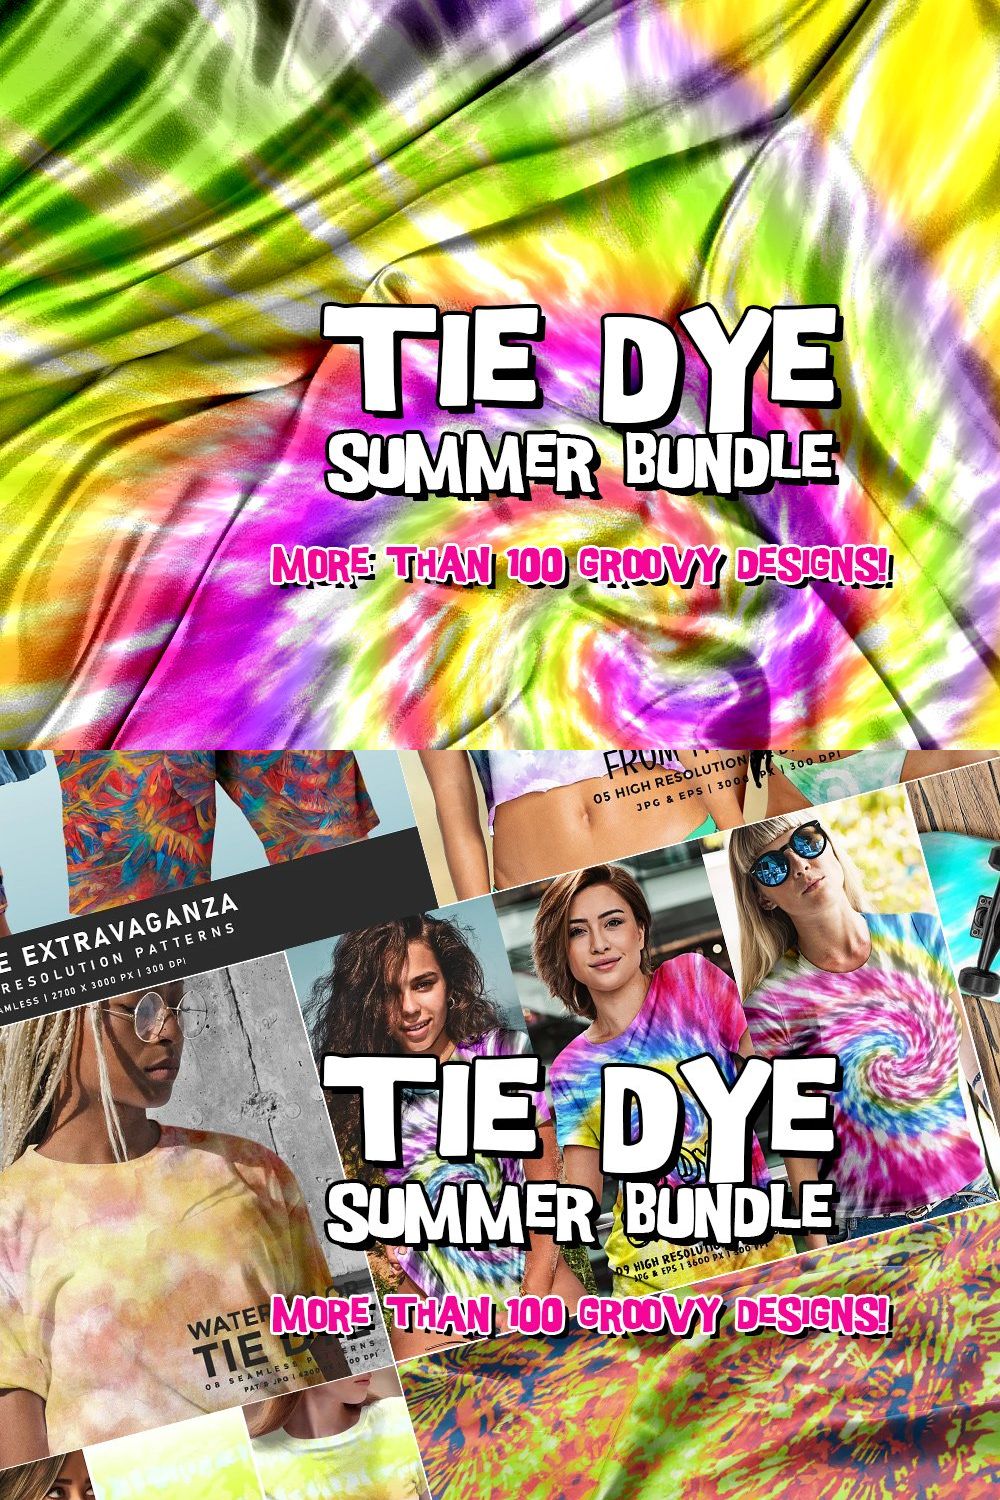 Tie Dye Summer Bundle pinterest preview image.